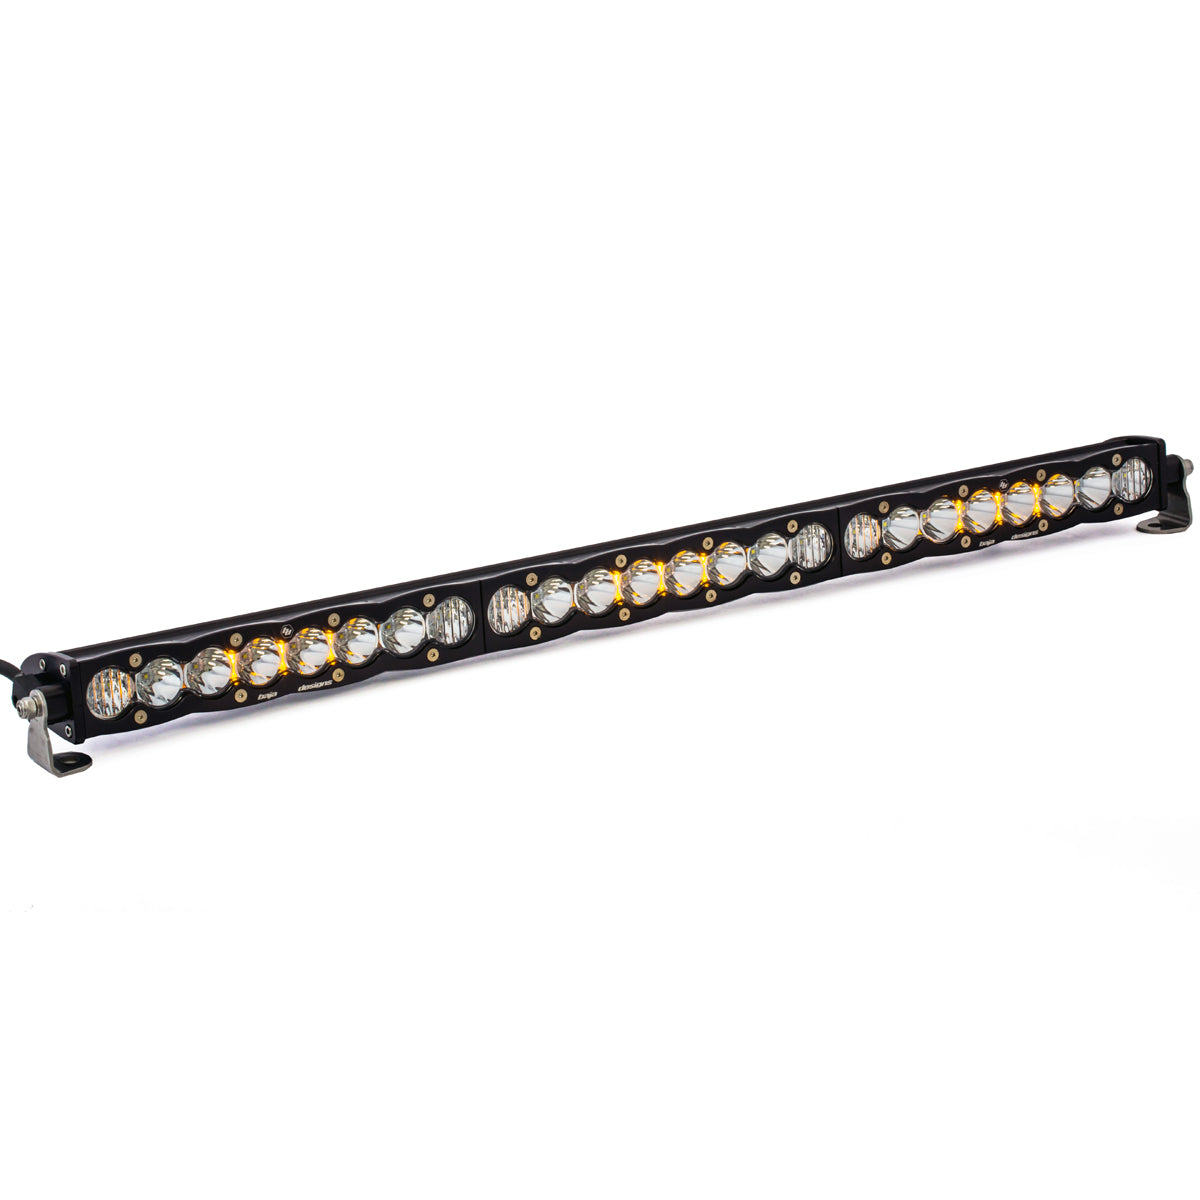 S8 Straight LED Light Bar - Universal